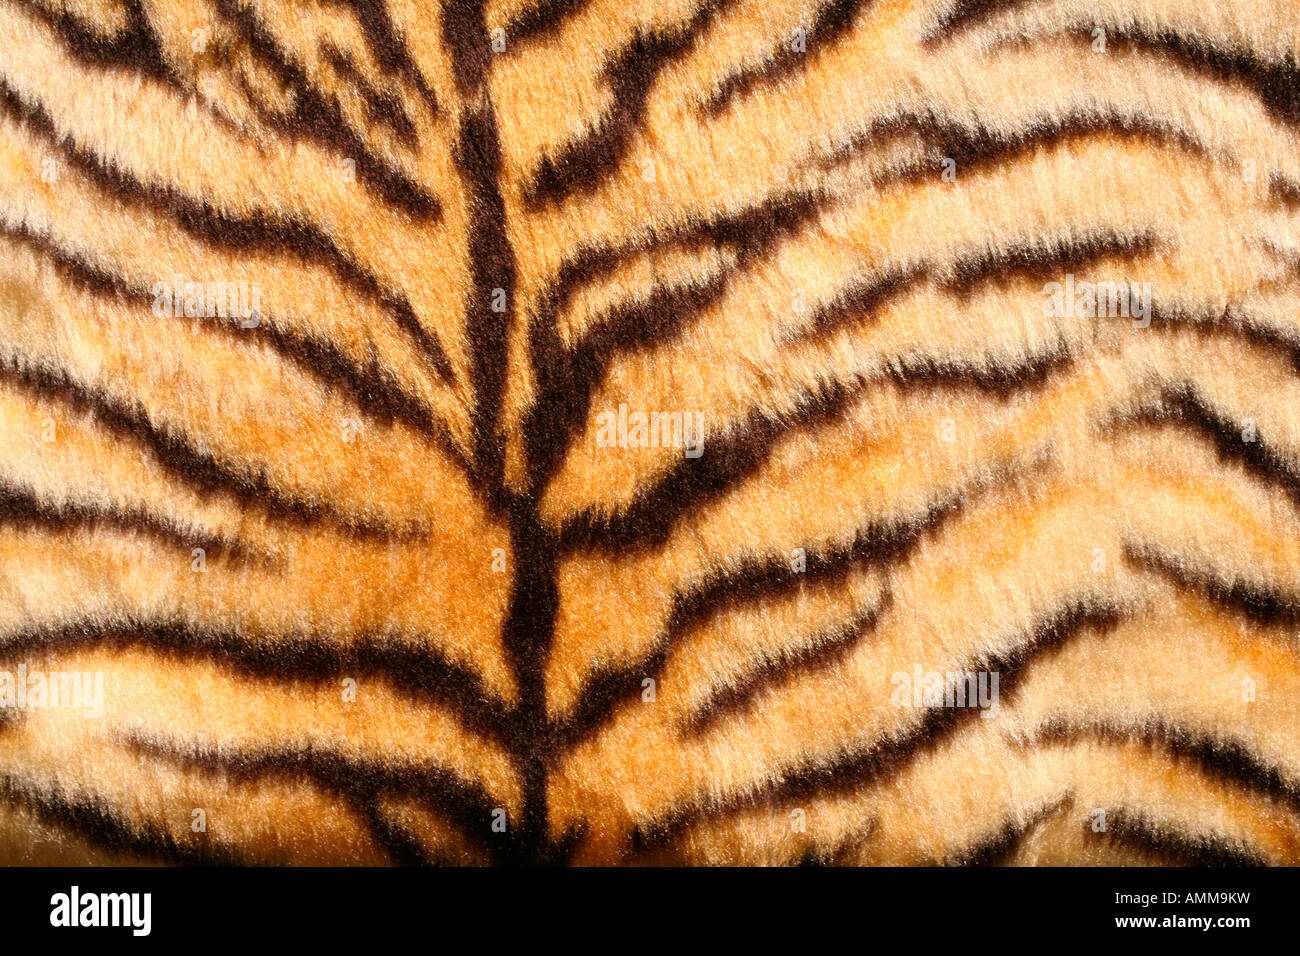 Tiger fur print Stock Photo - Alamy